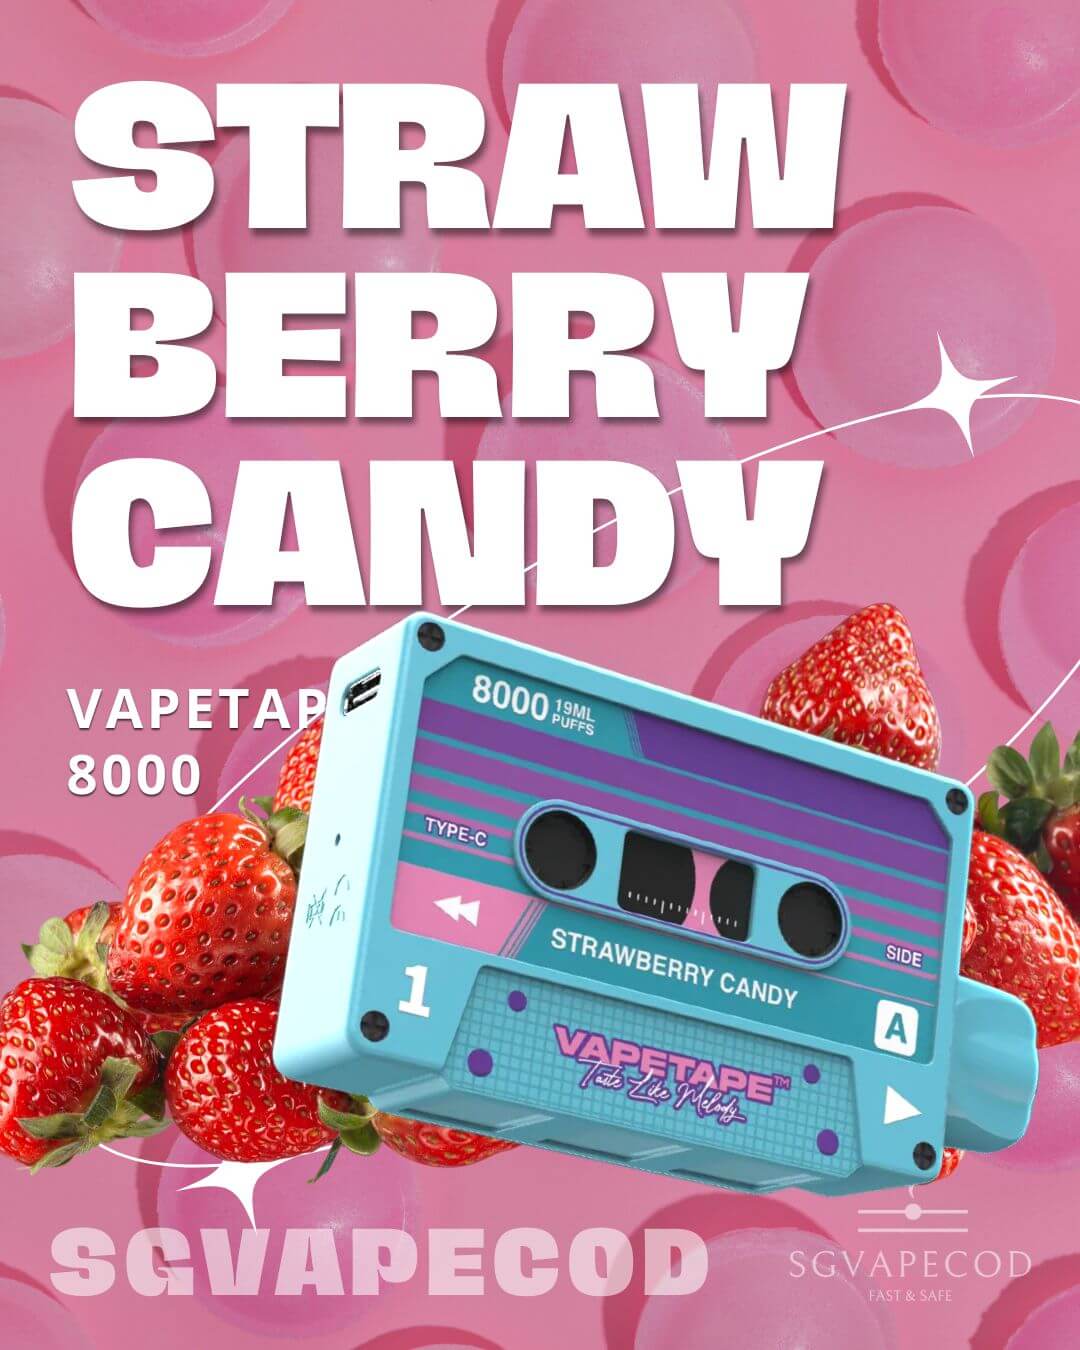 Vapetape-8000-Strawberry-Candy-(SG VAPE COD)